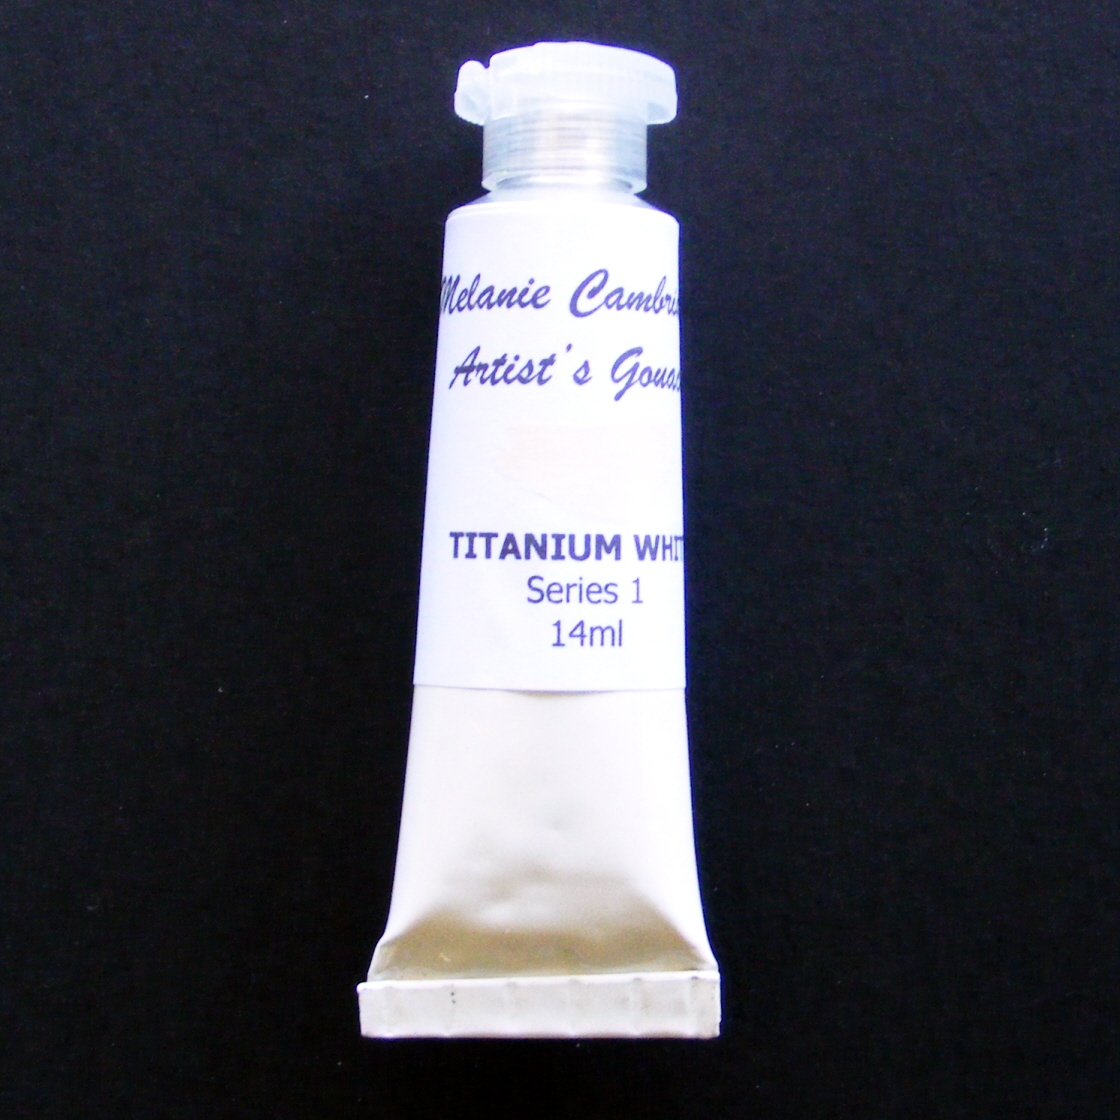 Titanium White 14ml